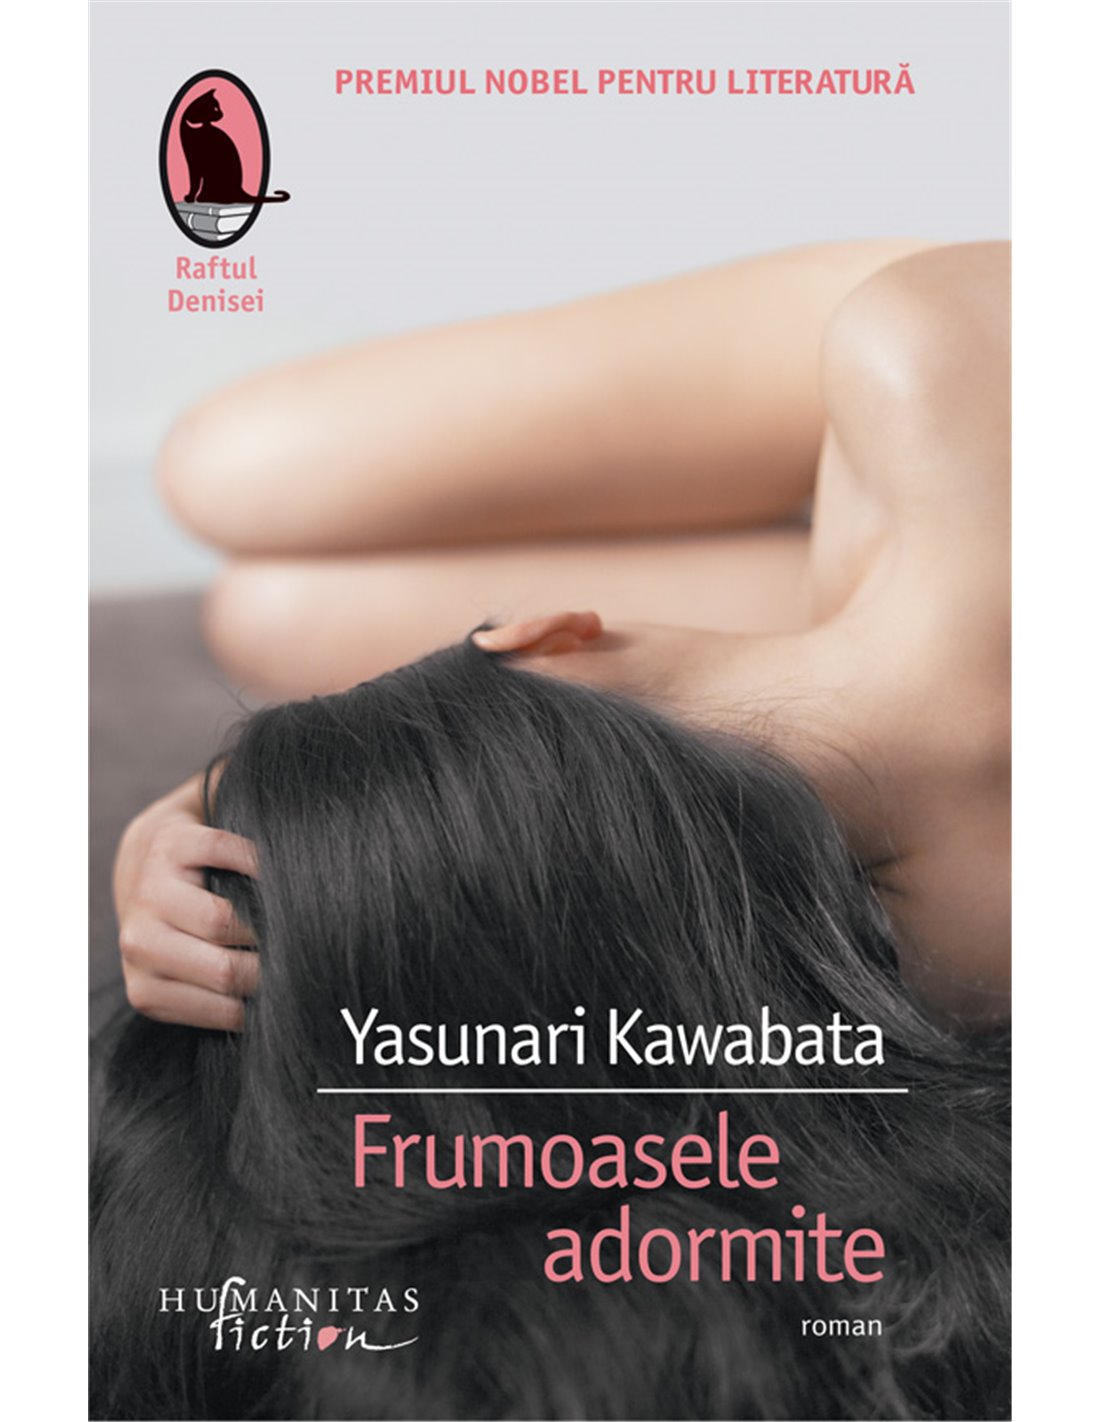 Frumoasele adormite - Yasunari Kawabata | Editura Humanitas